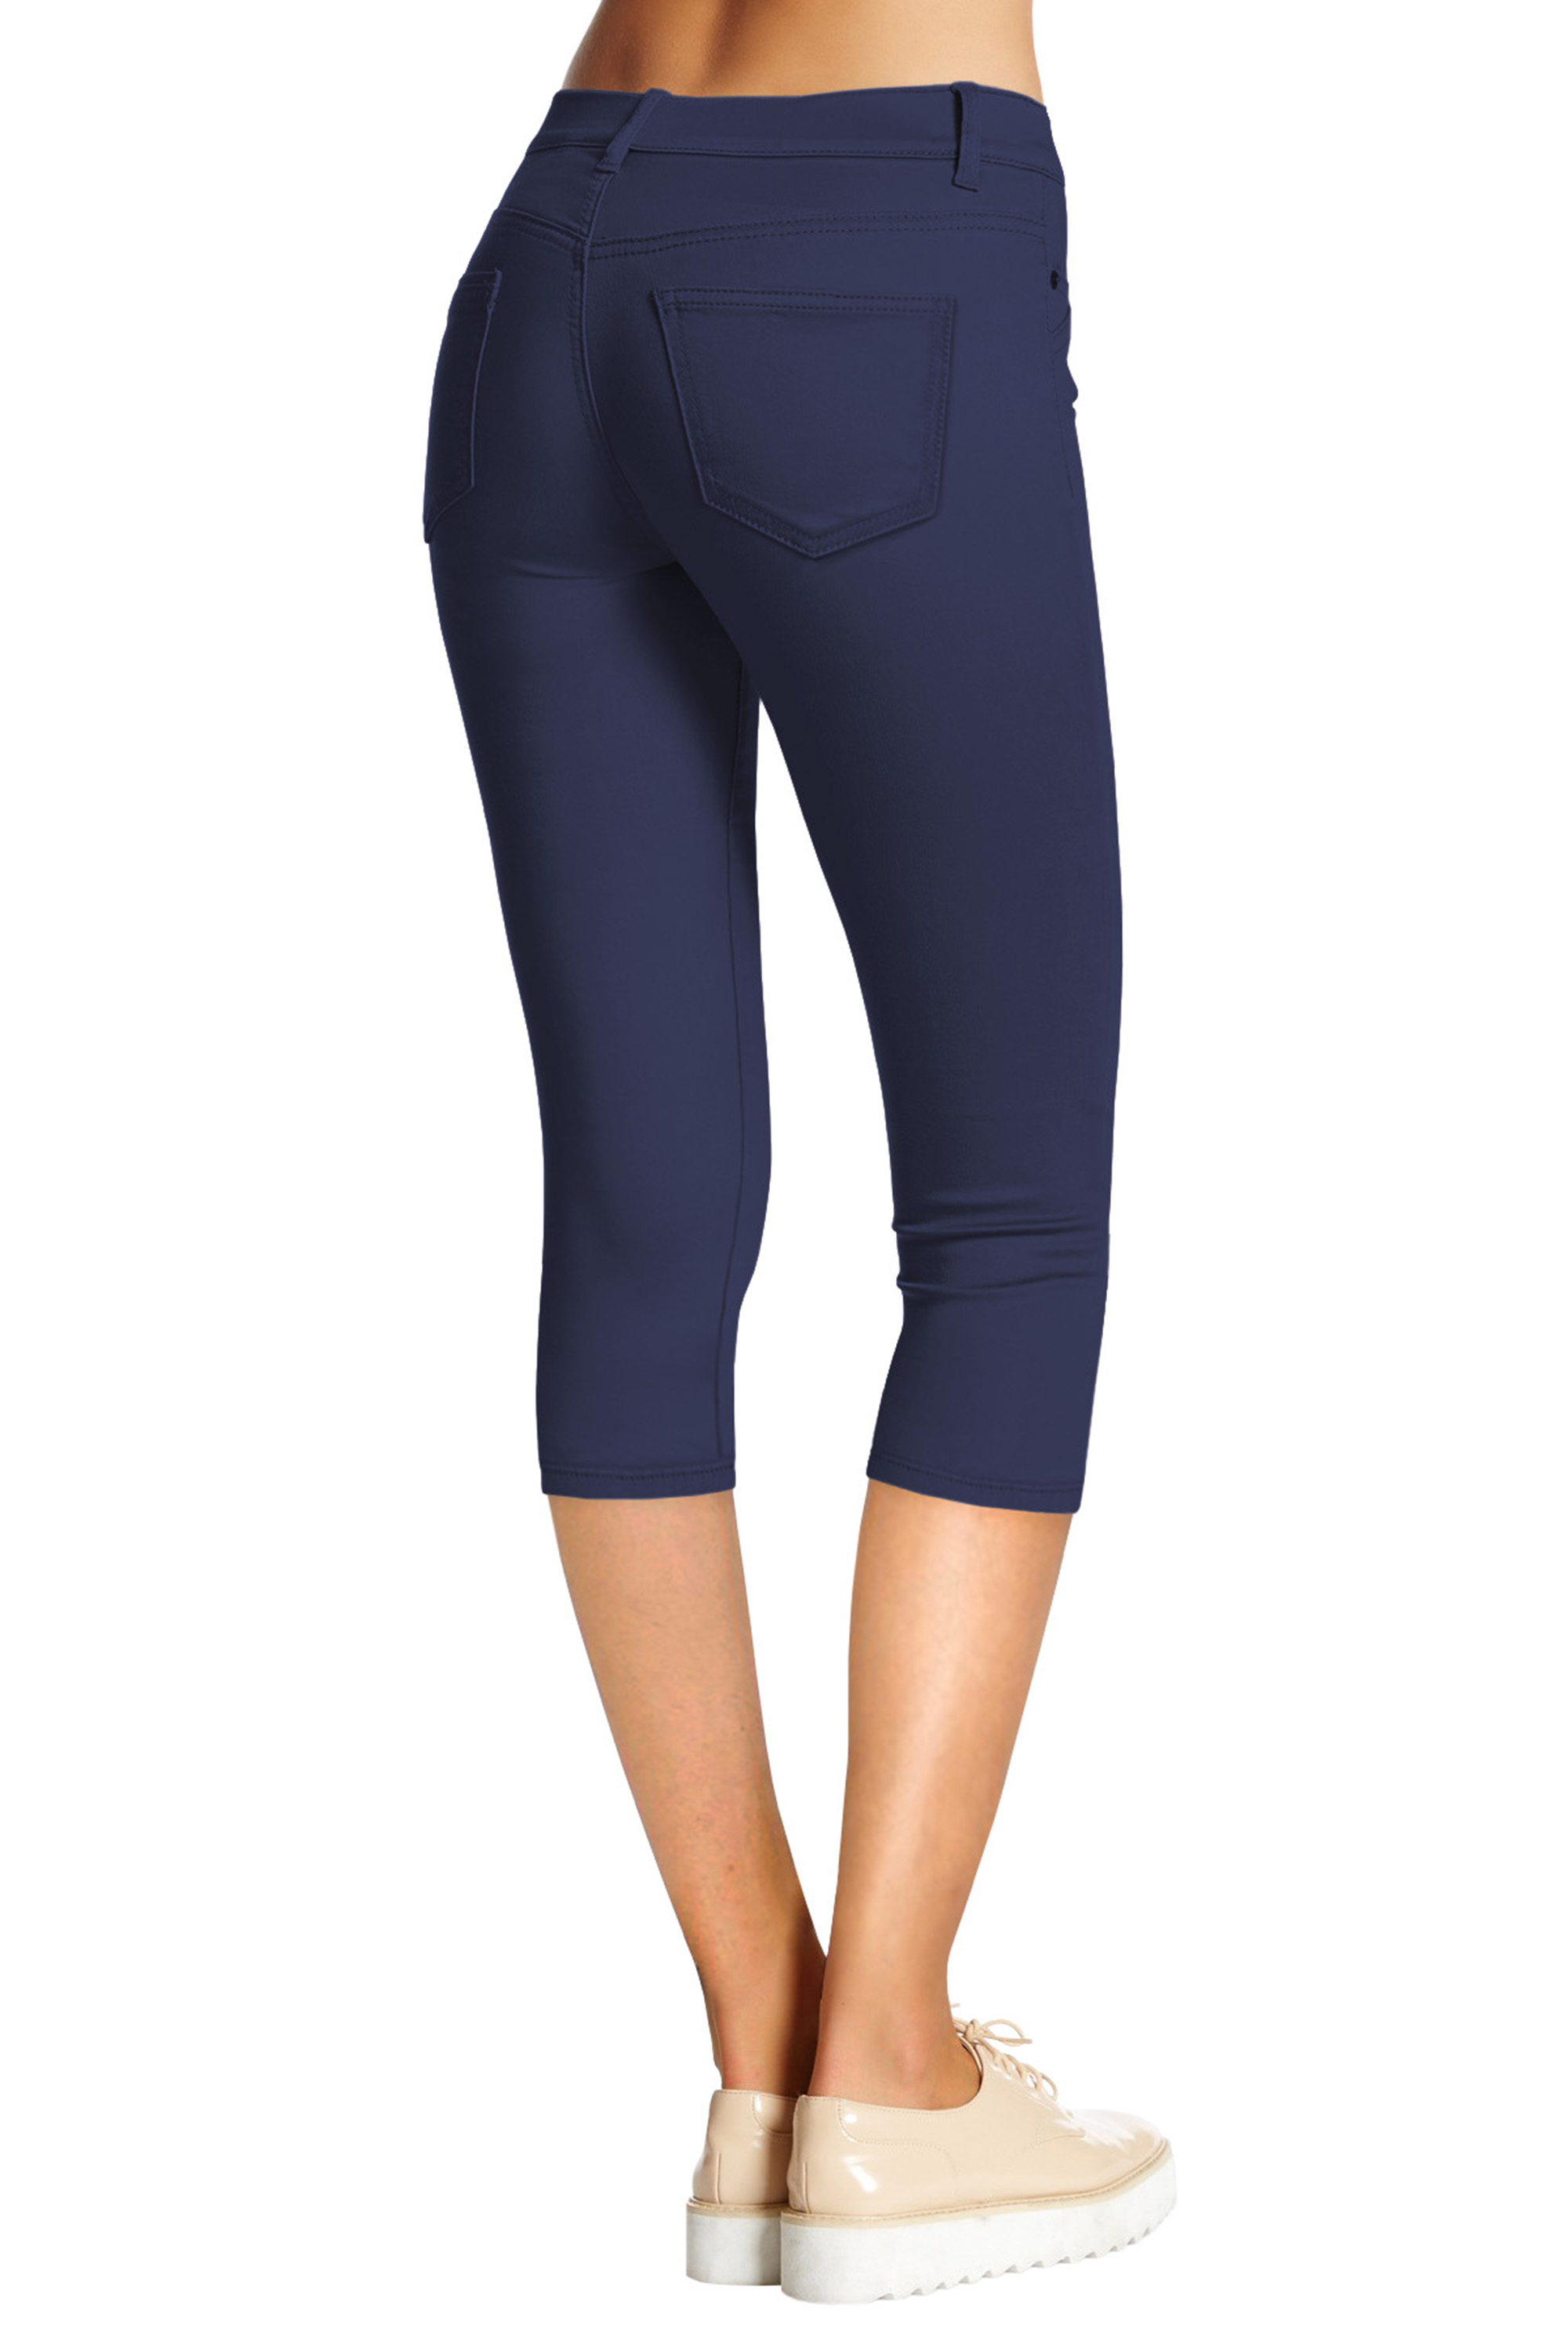 Hybrid and Company Women's Hyper Stretch Denim Capri Jeans - image 2 of 3